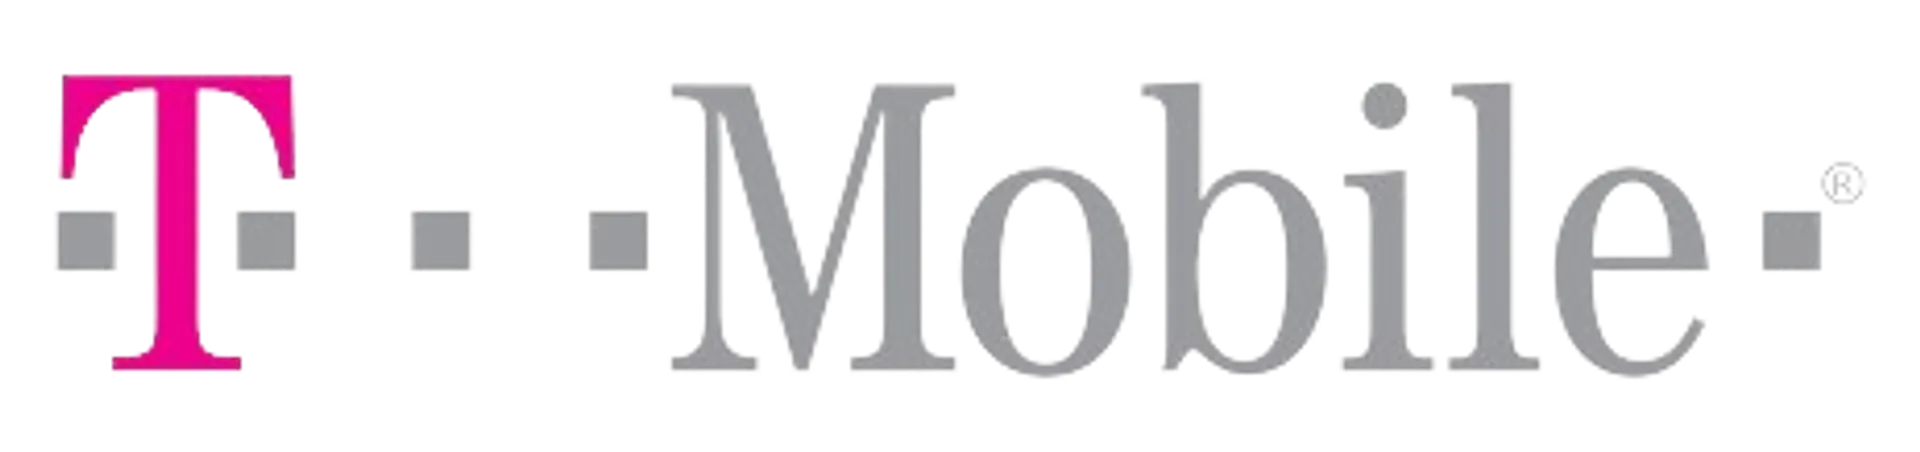 T-MOBILE logo die aktuell Flugblatt